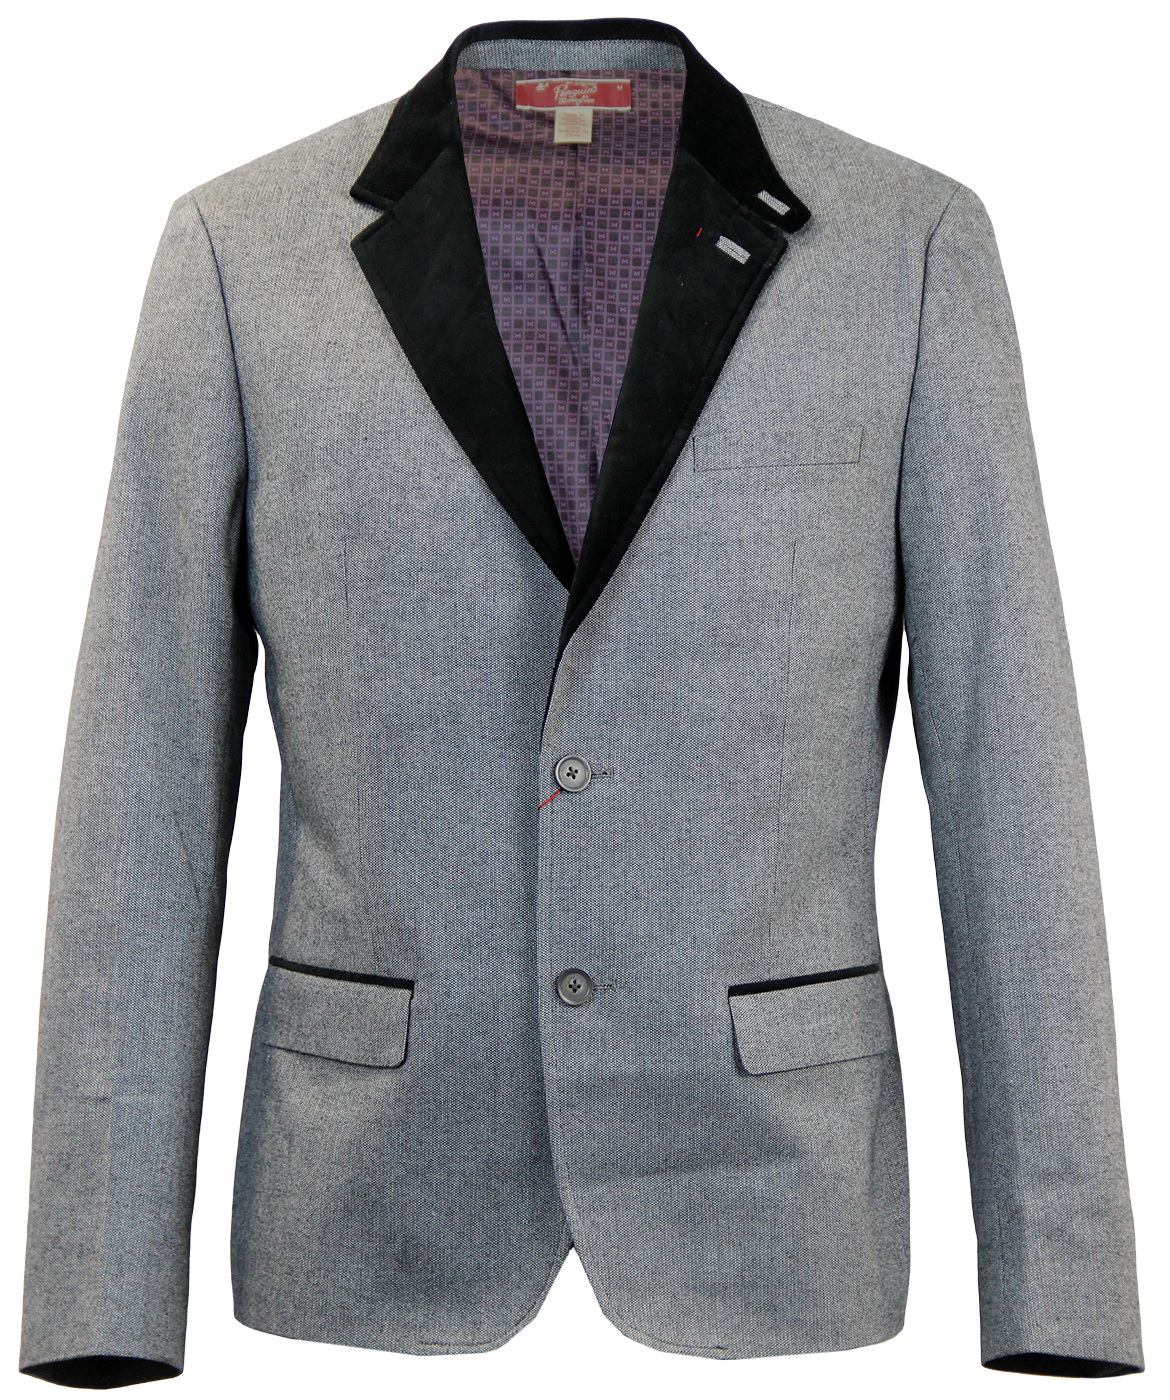 ORIGINAL PENGUIN Retro Mod Sixties Suit Jacket in Grey/Black